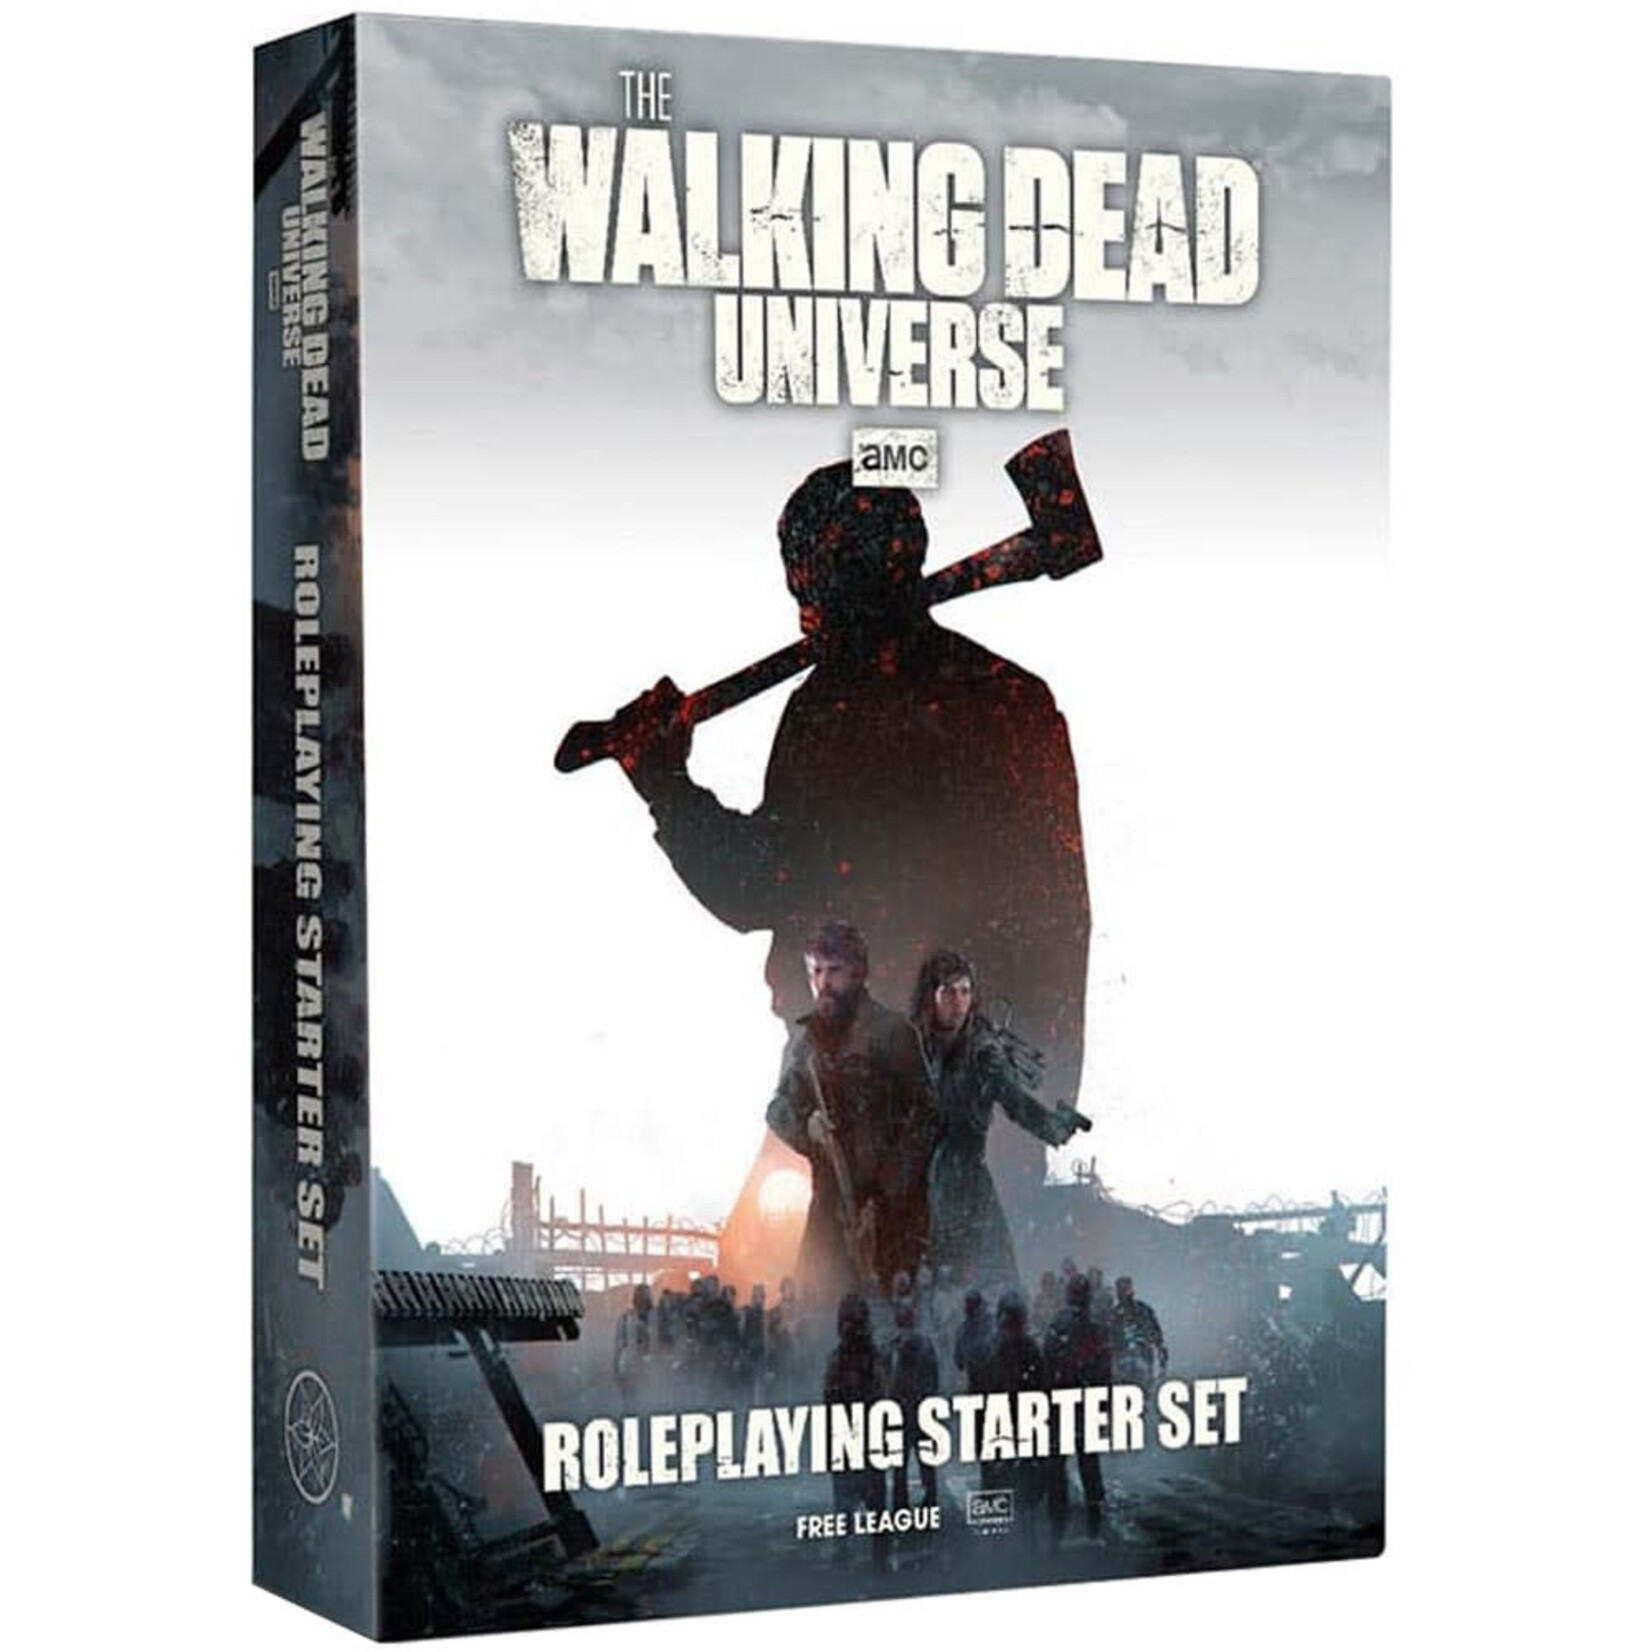 The Walking Dead Universe RPG Core Starter Set